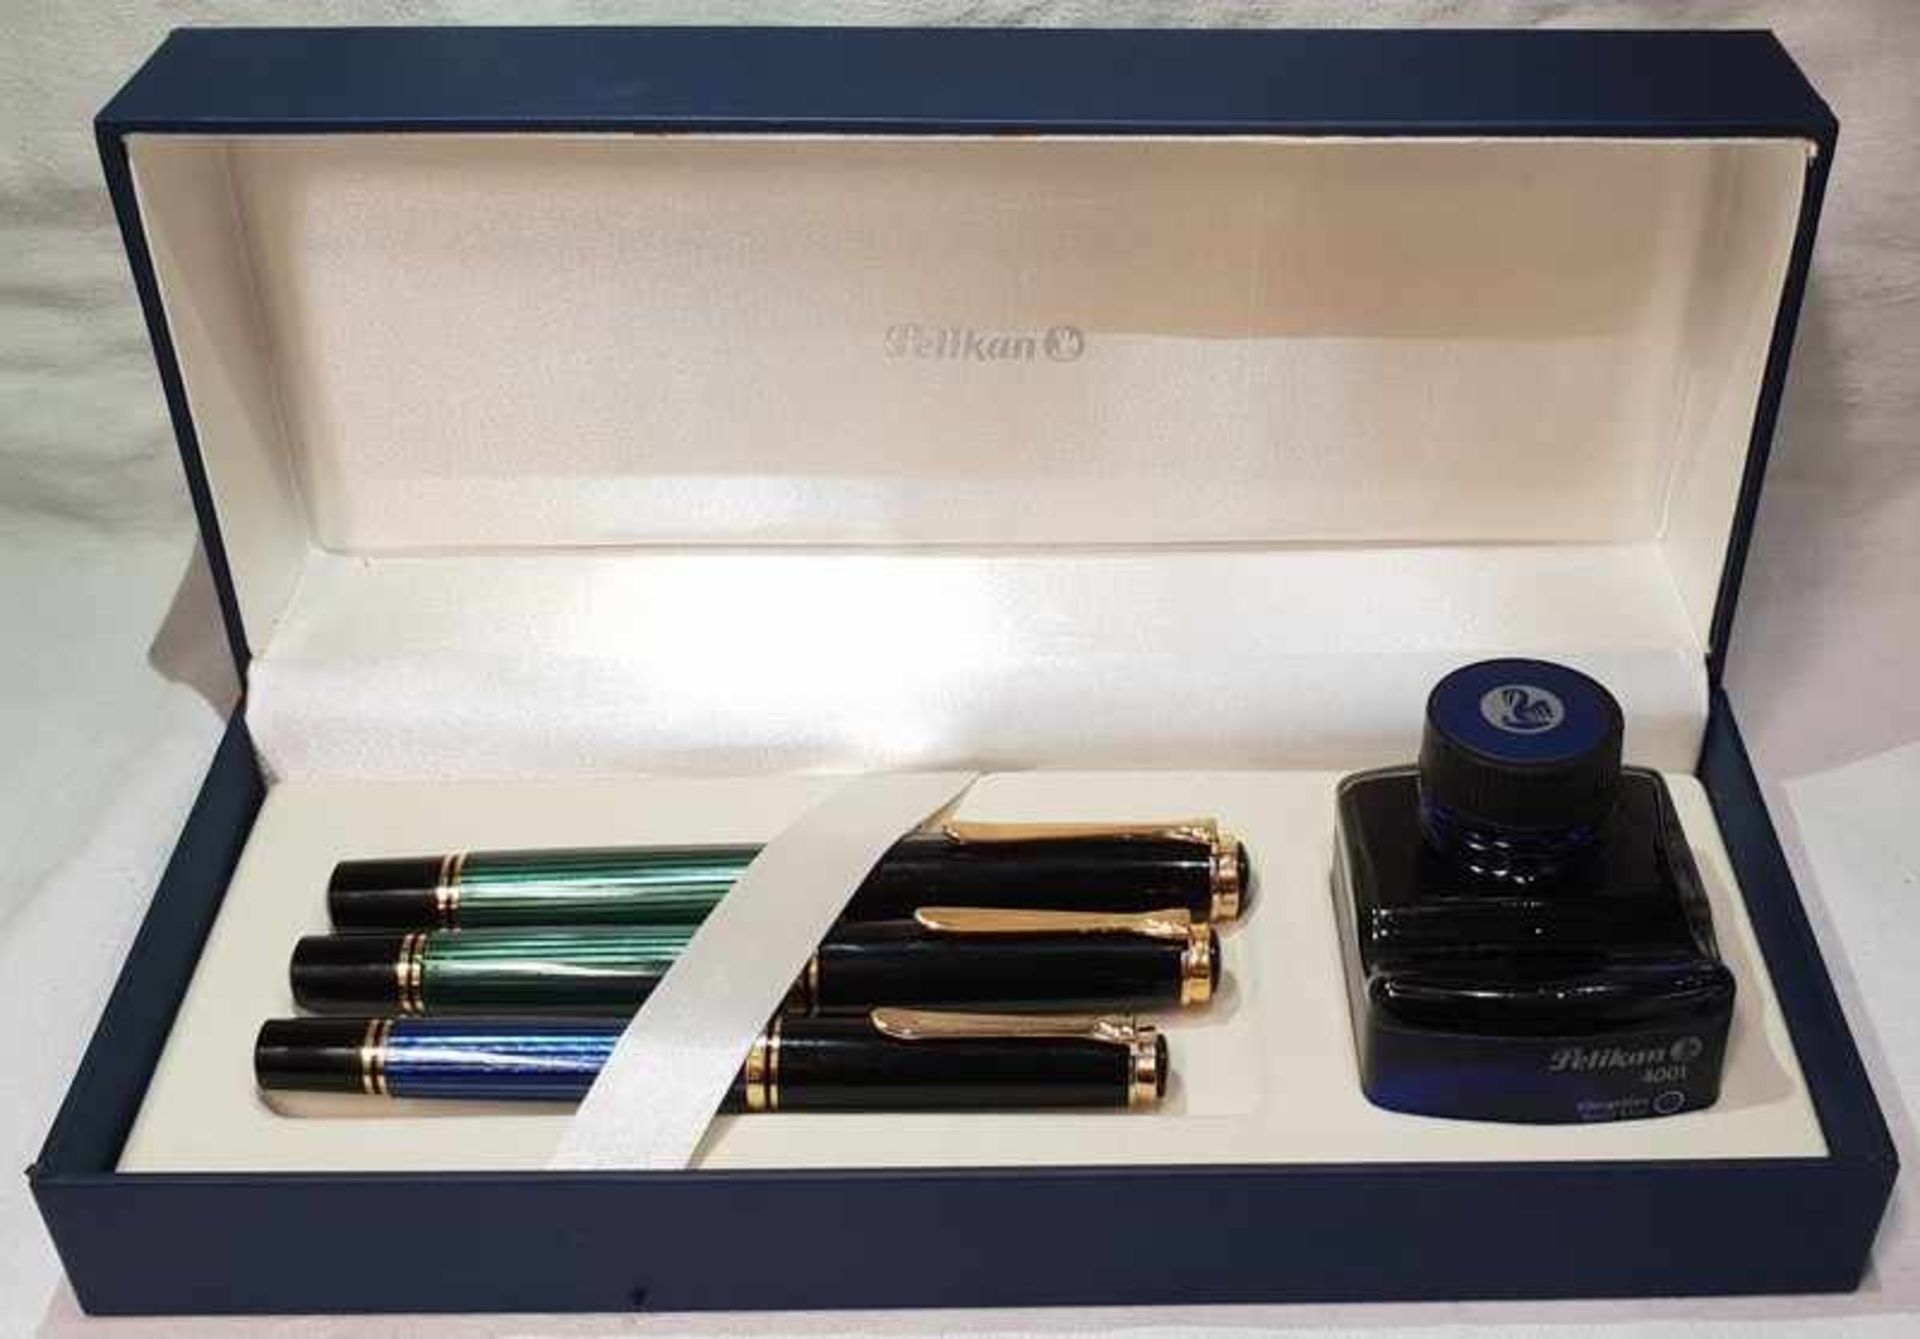 Großes Pelikan Schreibsetbestehend aus 3 Füllfedern, Modellnr.: M1000, Feder Gold 750 tlw.